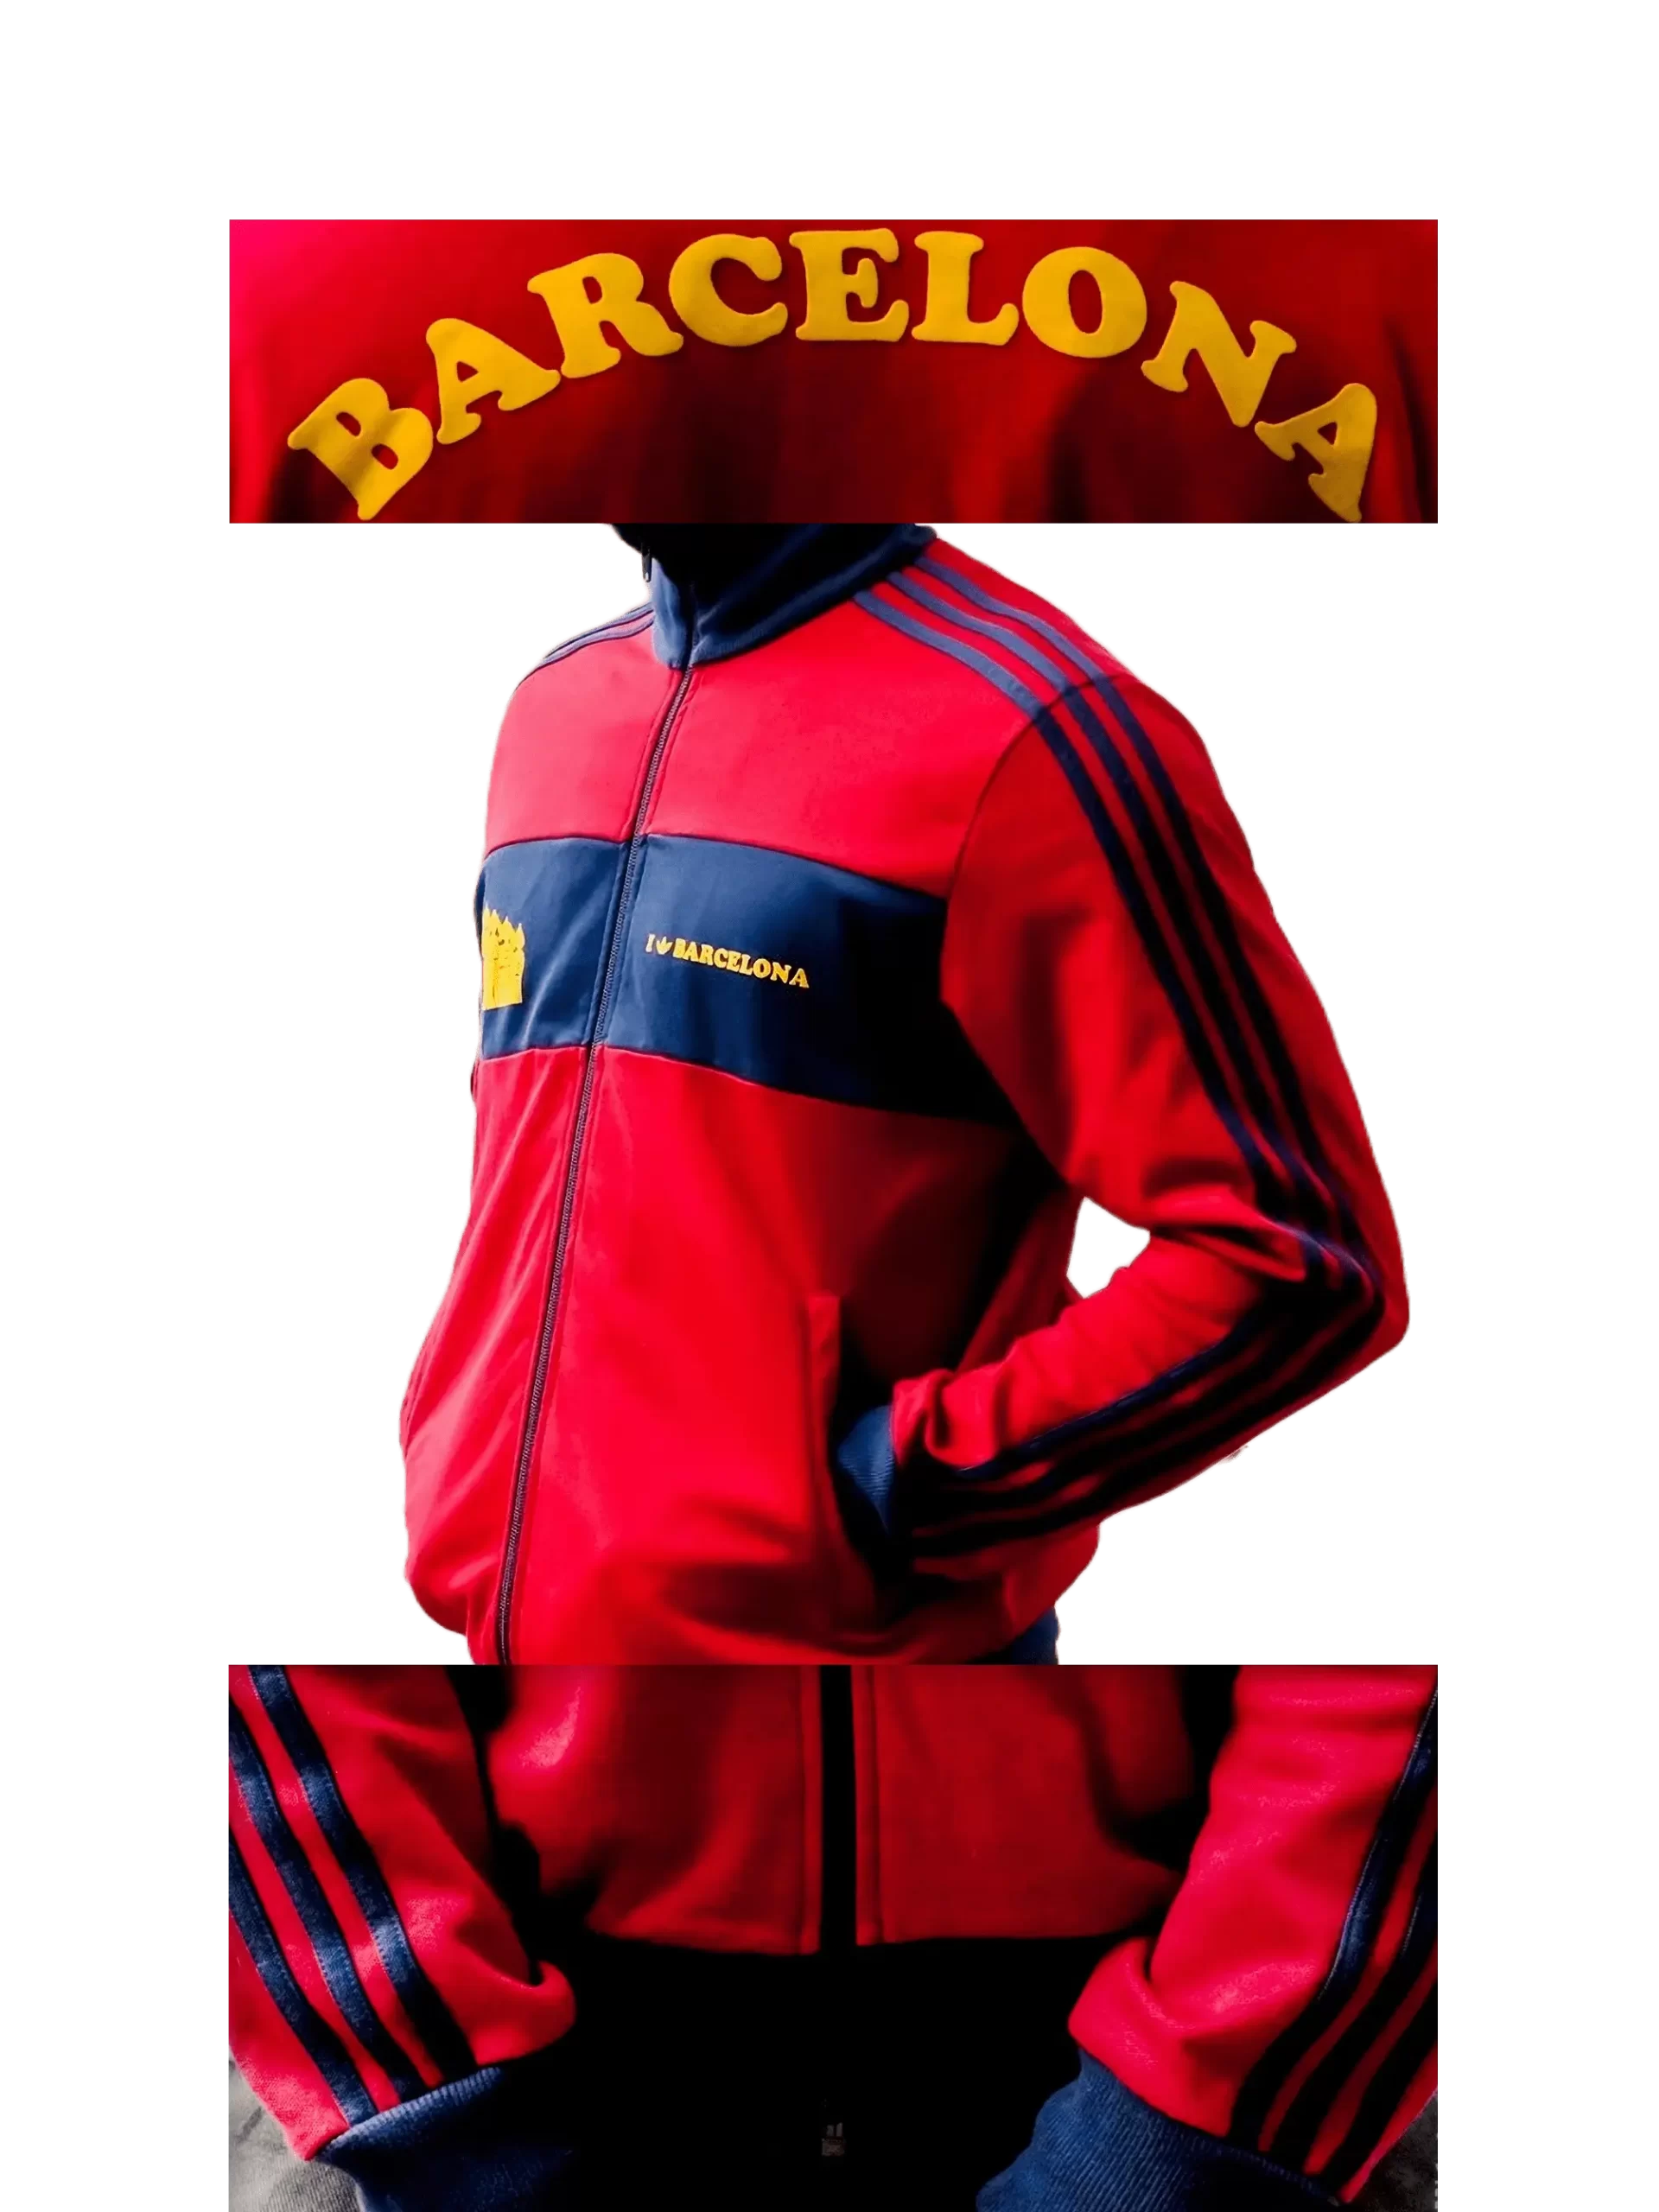 Men's 2006 Barcelona TT-Two by Adidas Originals: Endorsed (EnLawded.com file #lmchk58211ip2y123308kg9st)